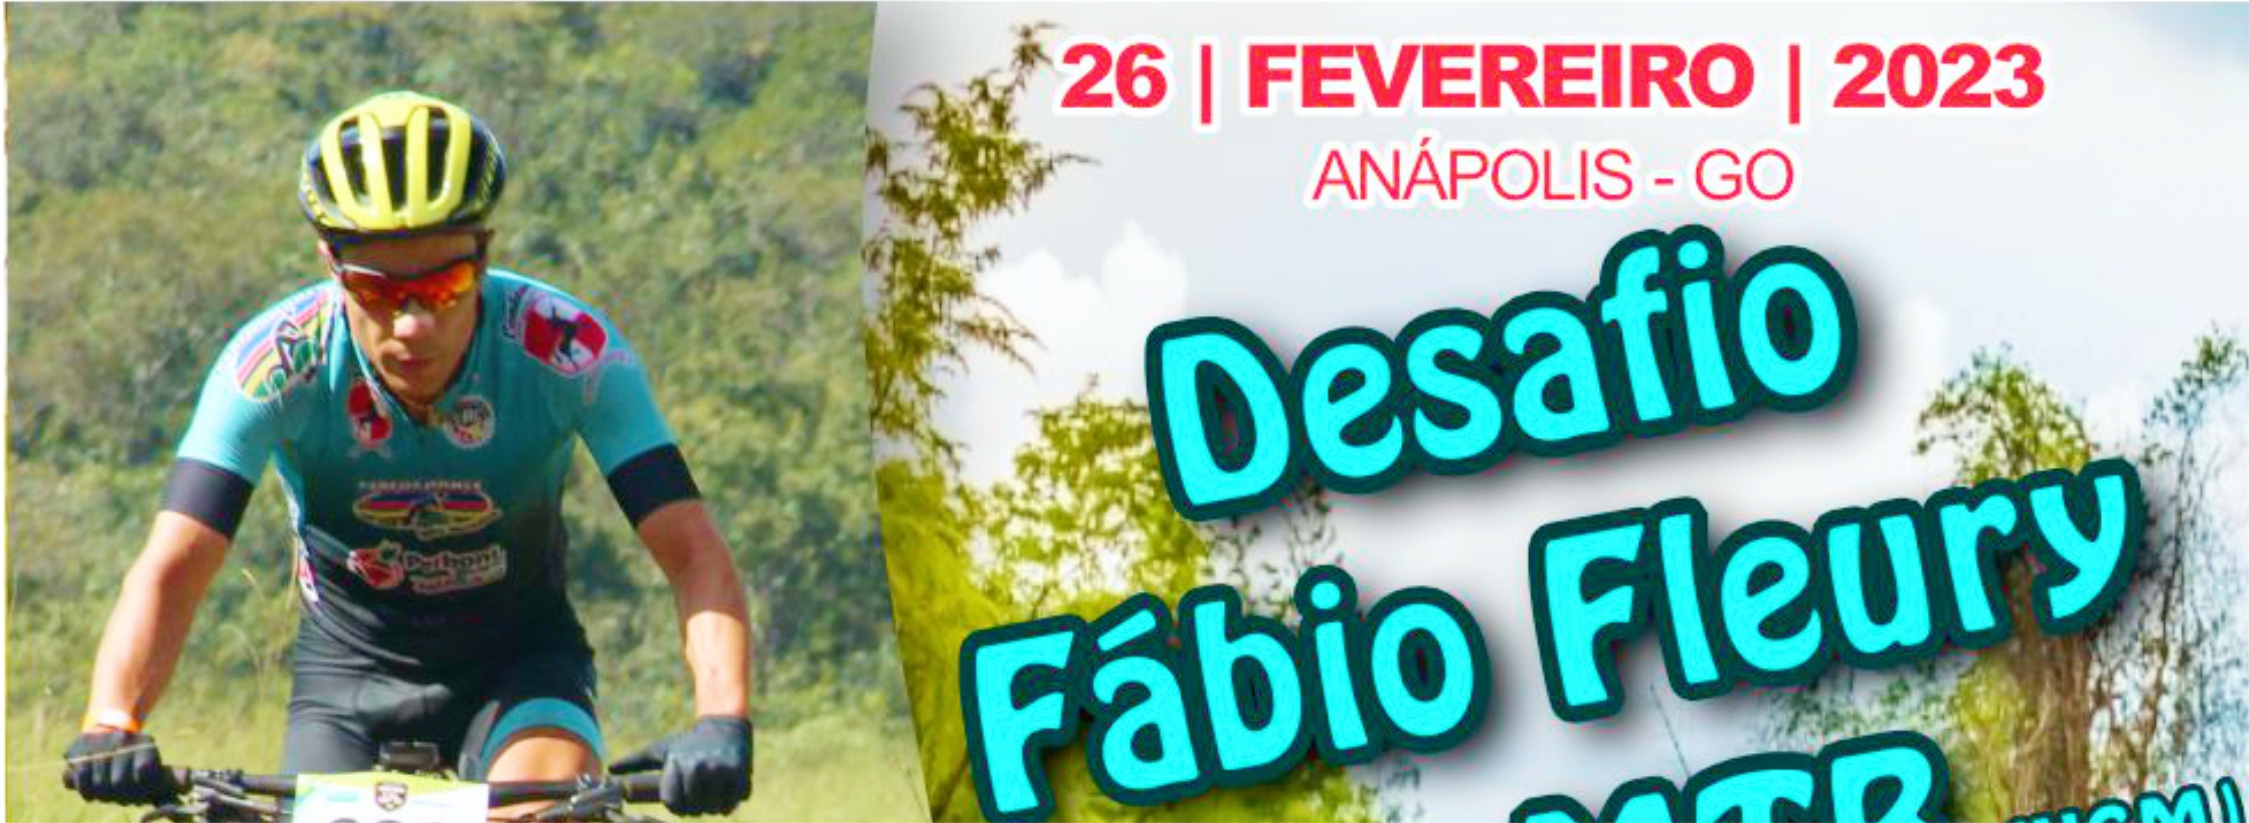 desafio-fabio-fleury-2023-banner